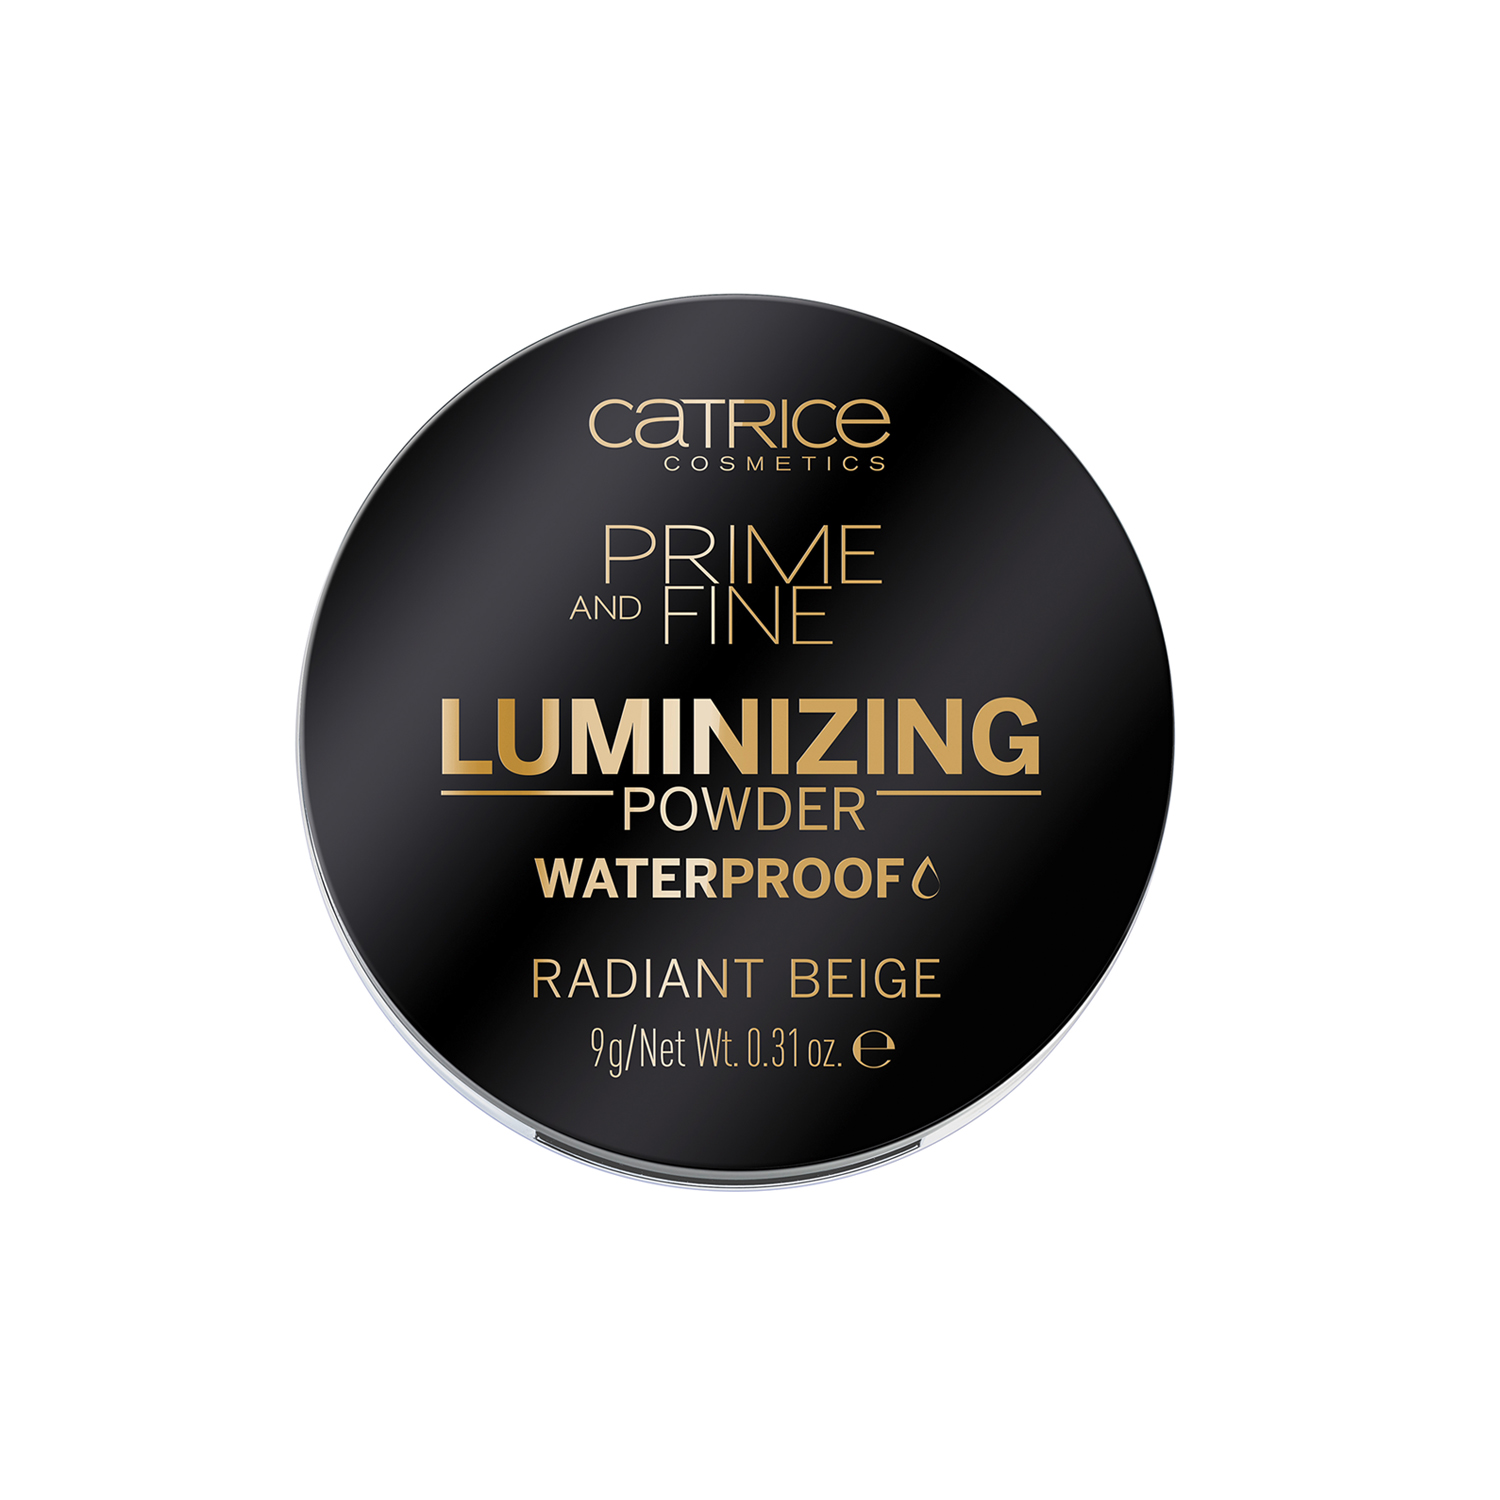 Catrice Prime And Fine Luminizing Powder Waterproof 010